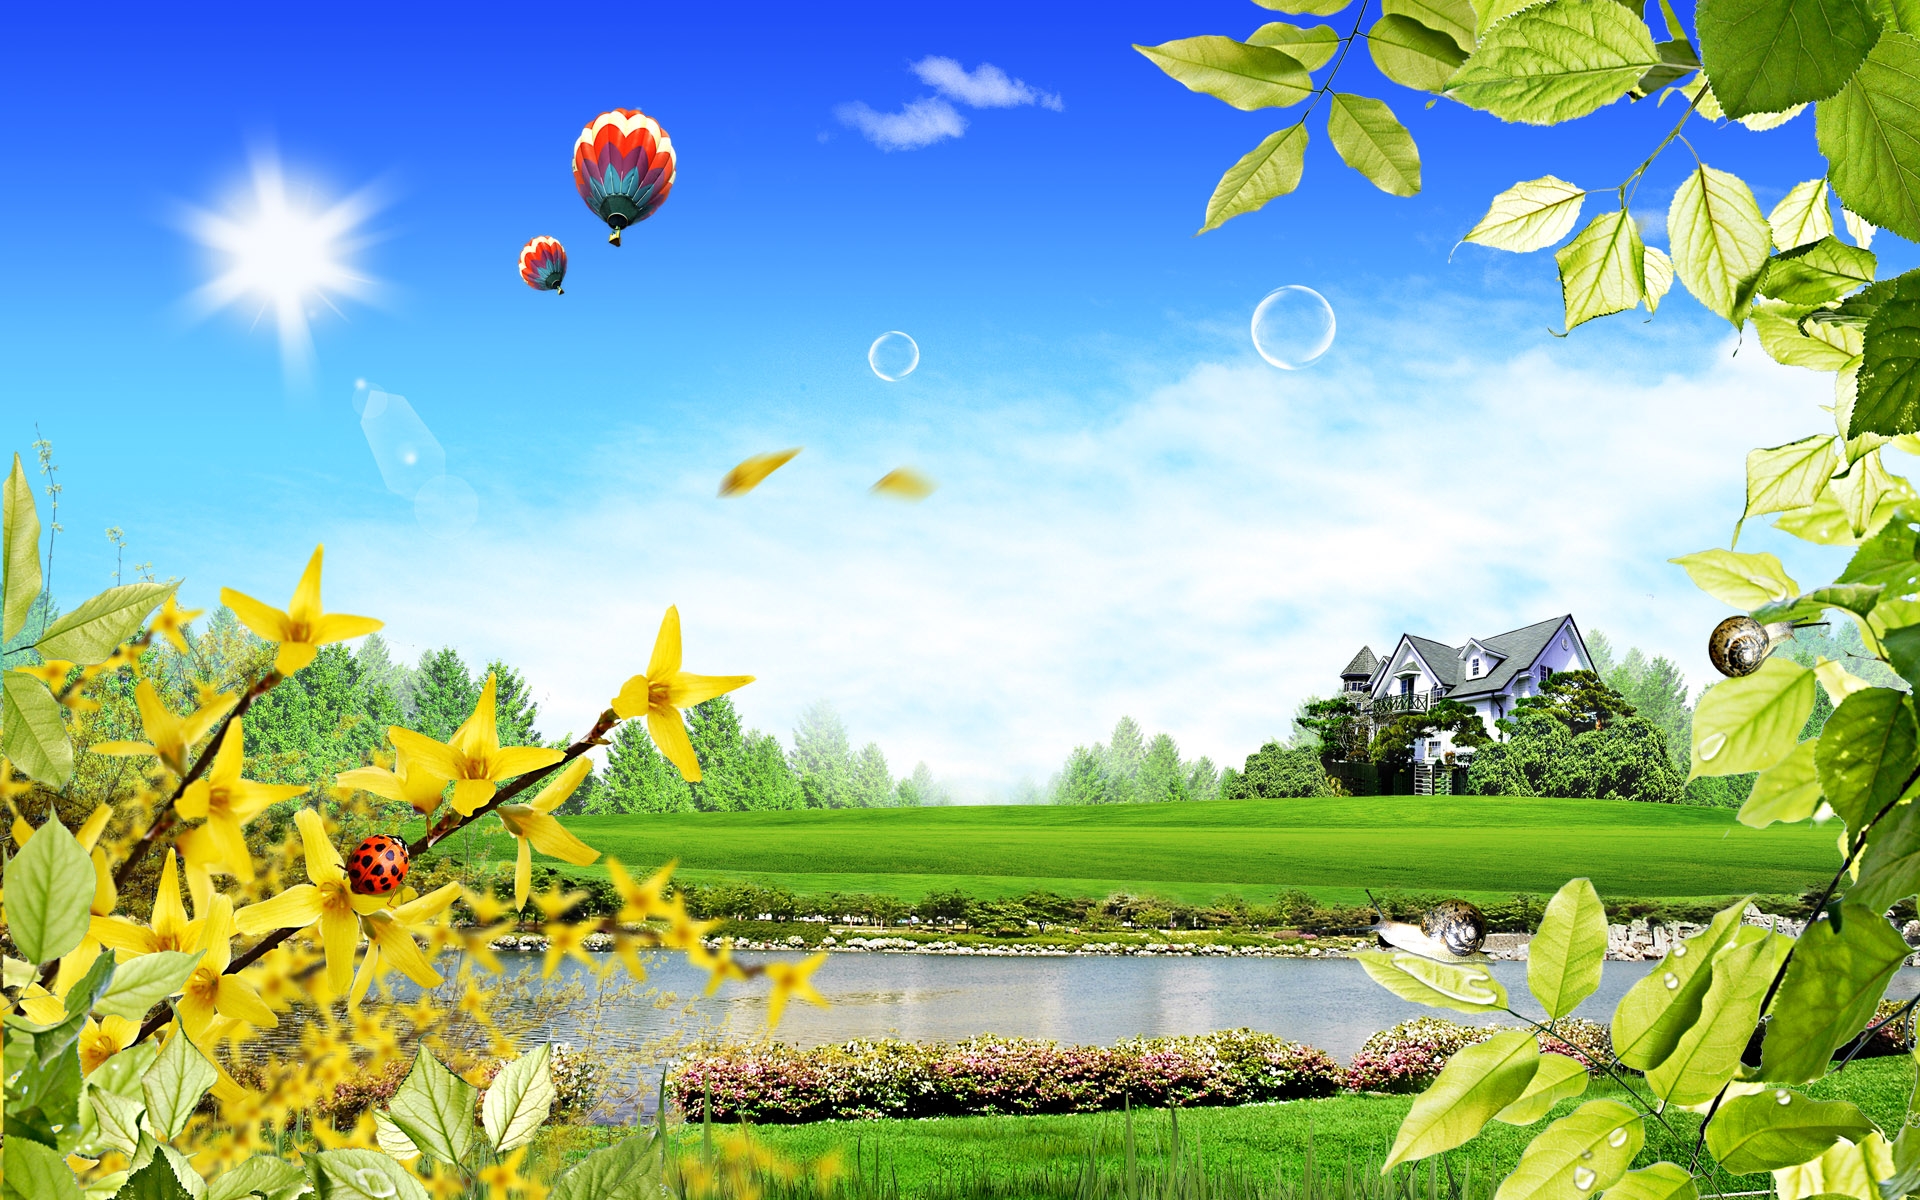 Beautiful Scenery Handset Wallpaper Images Free Download on Lovepik |  400243485